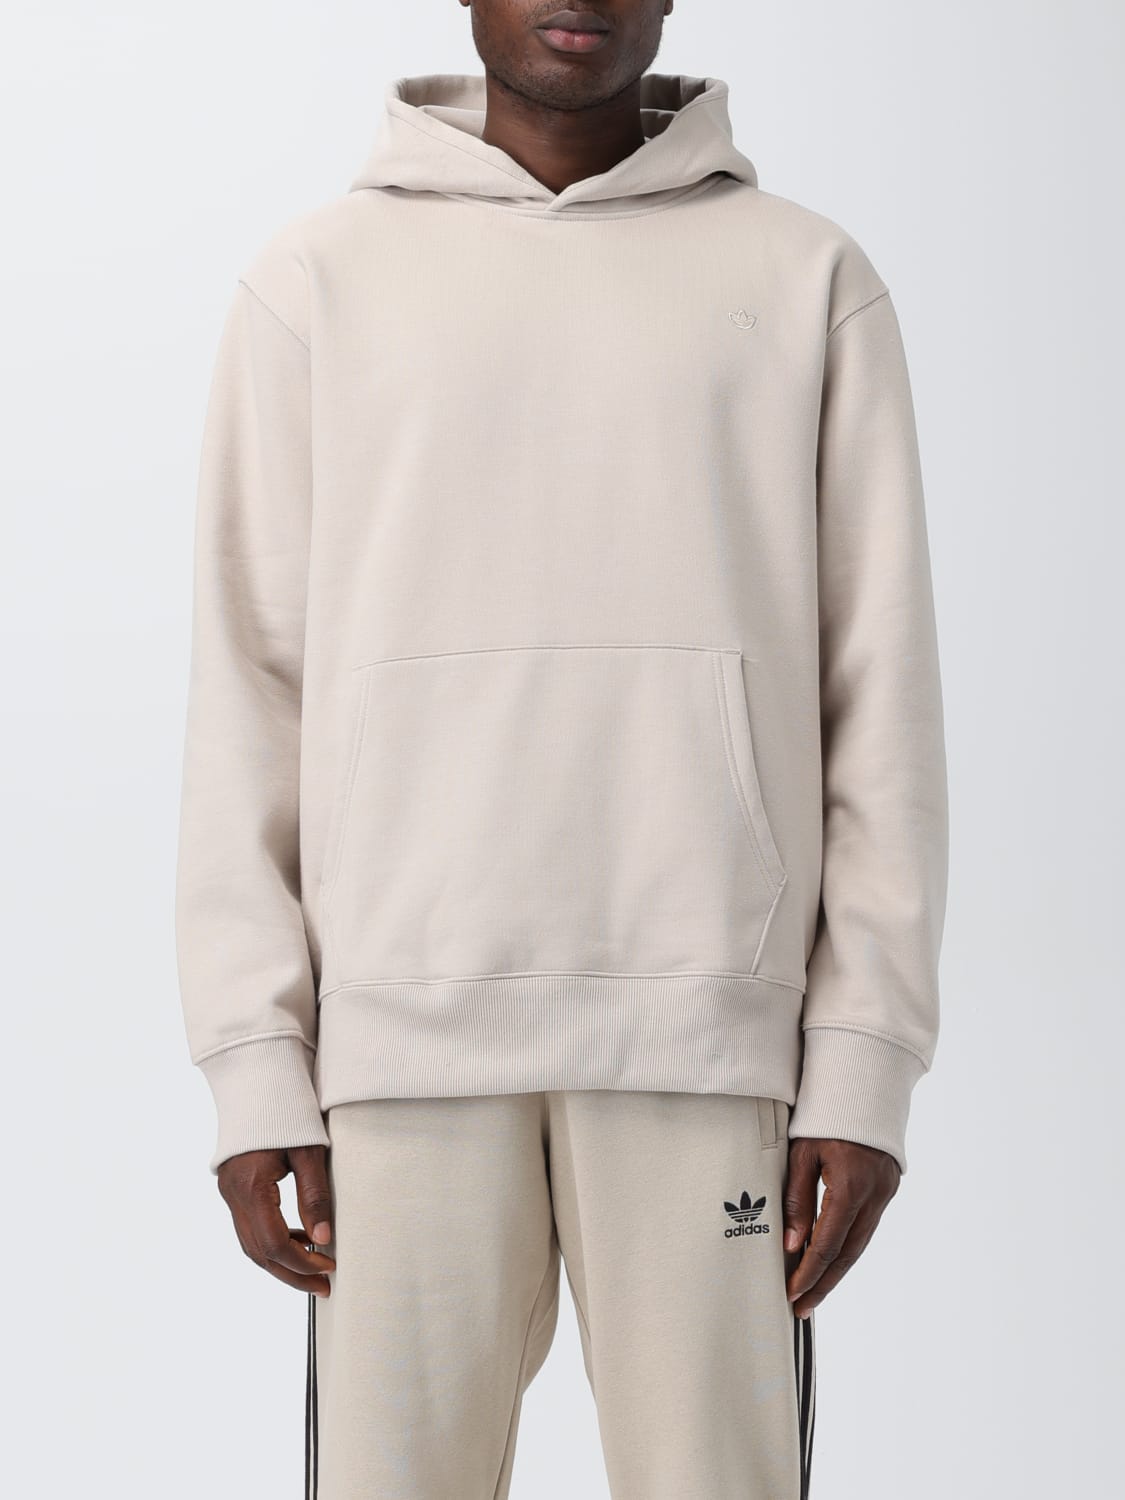 ADIDAS ORIGINALS: Adicolor Contempo sweatshirt in cotton blend - Beige | Adidas  Originals sweatshirt IM2118 online at